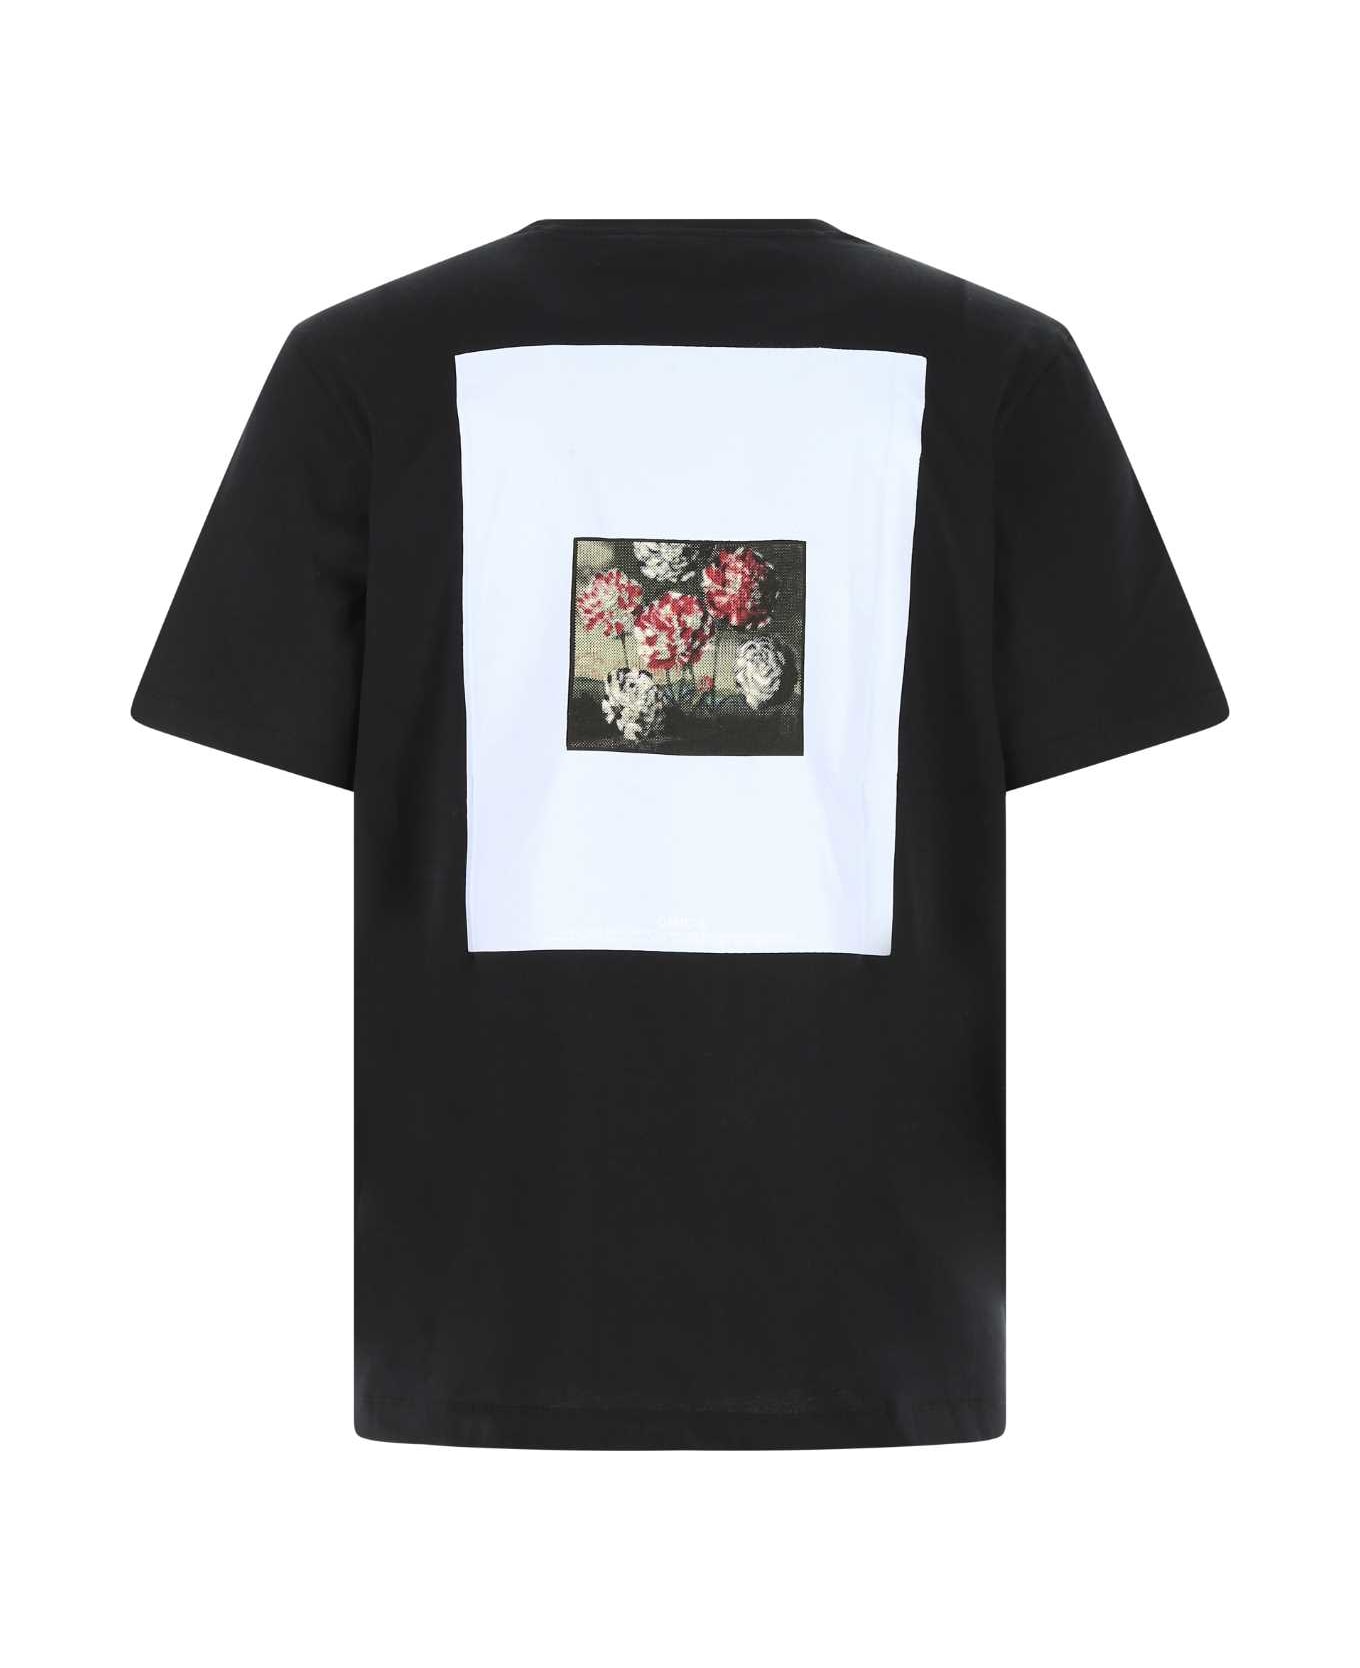 OAMC Black Cotton T-shirt - 001 シャツ